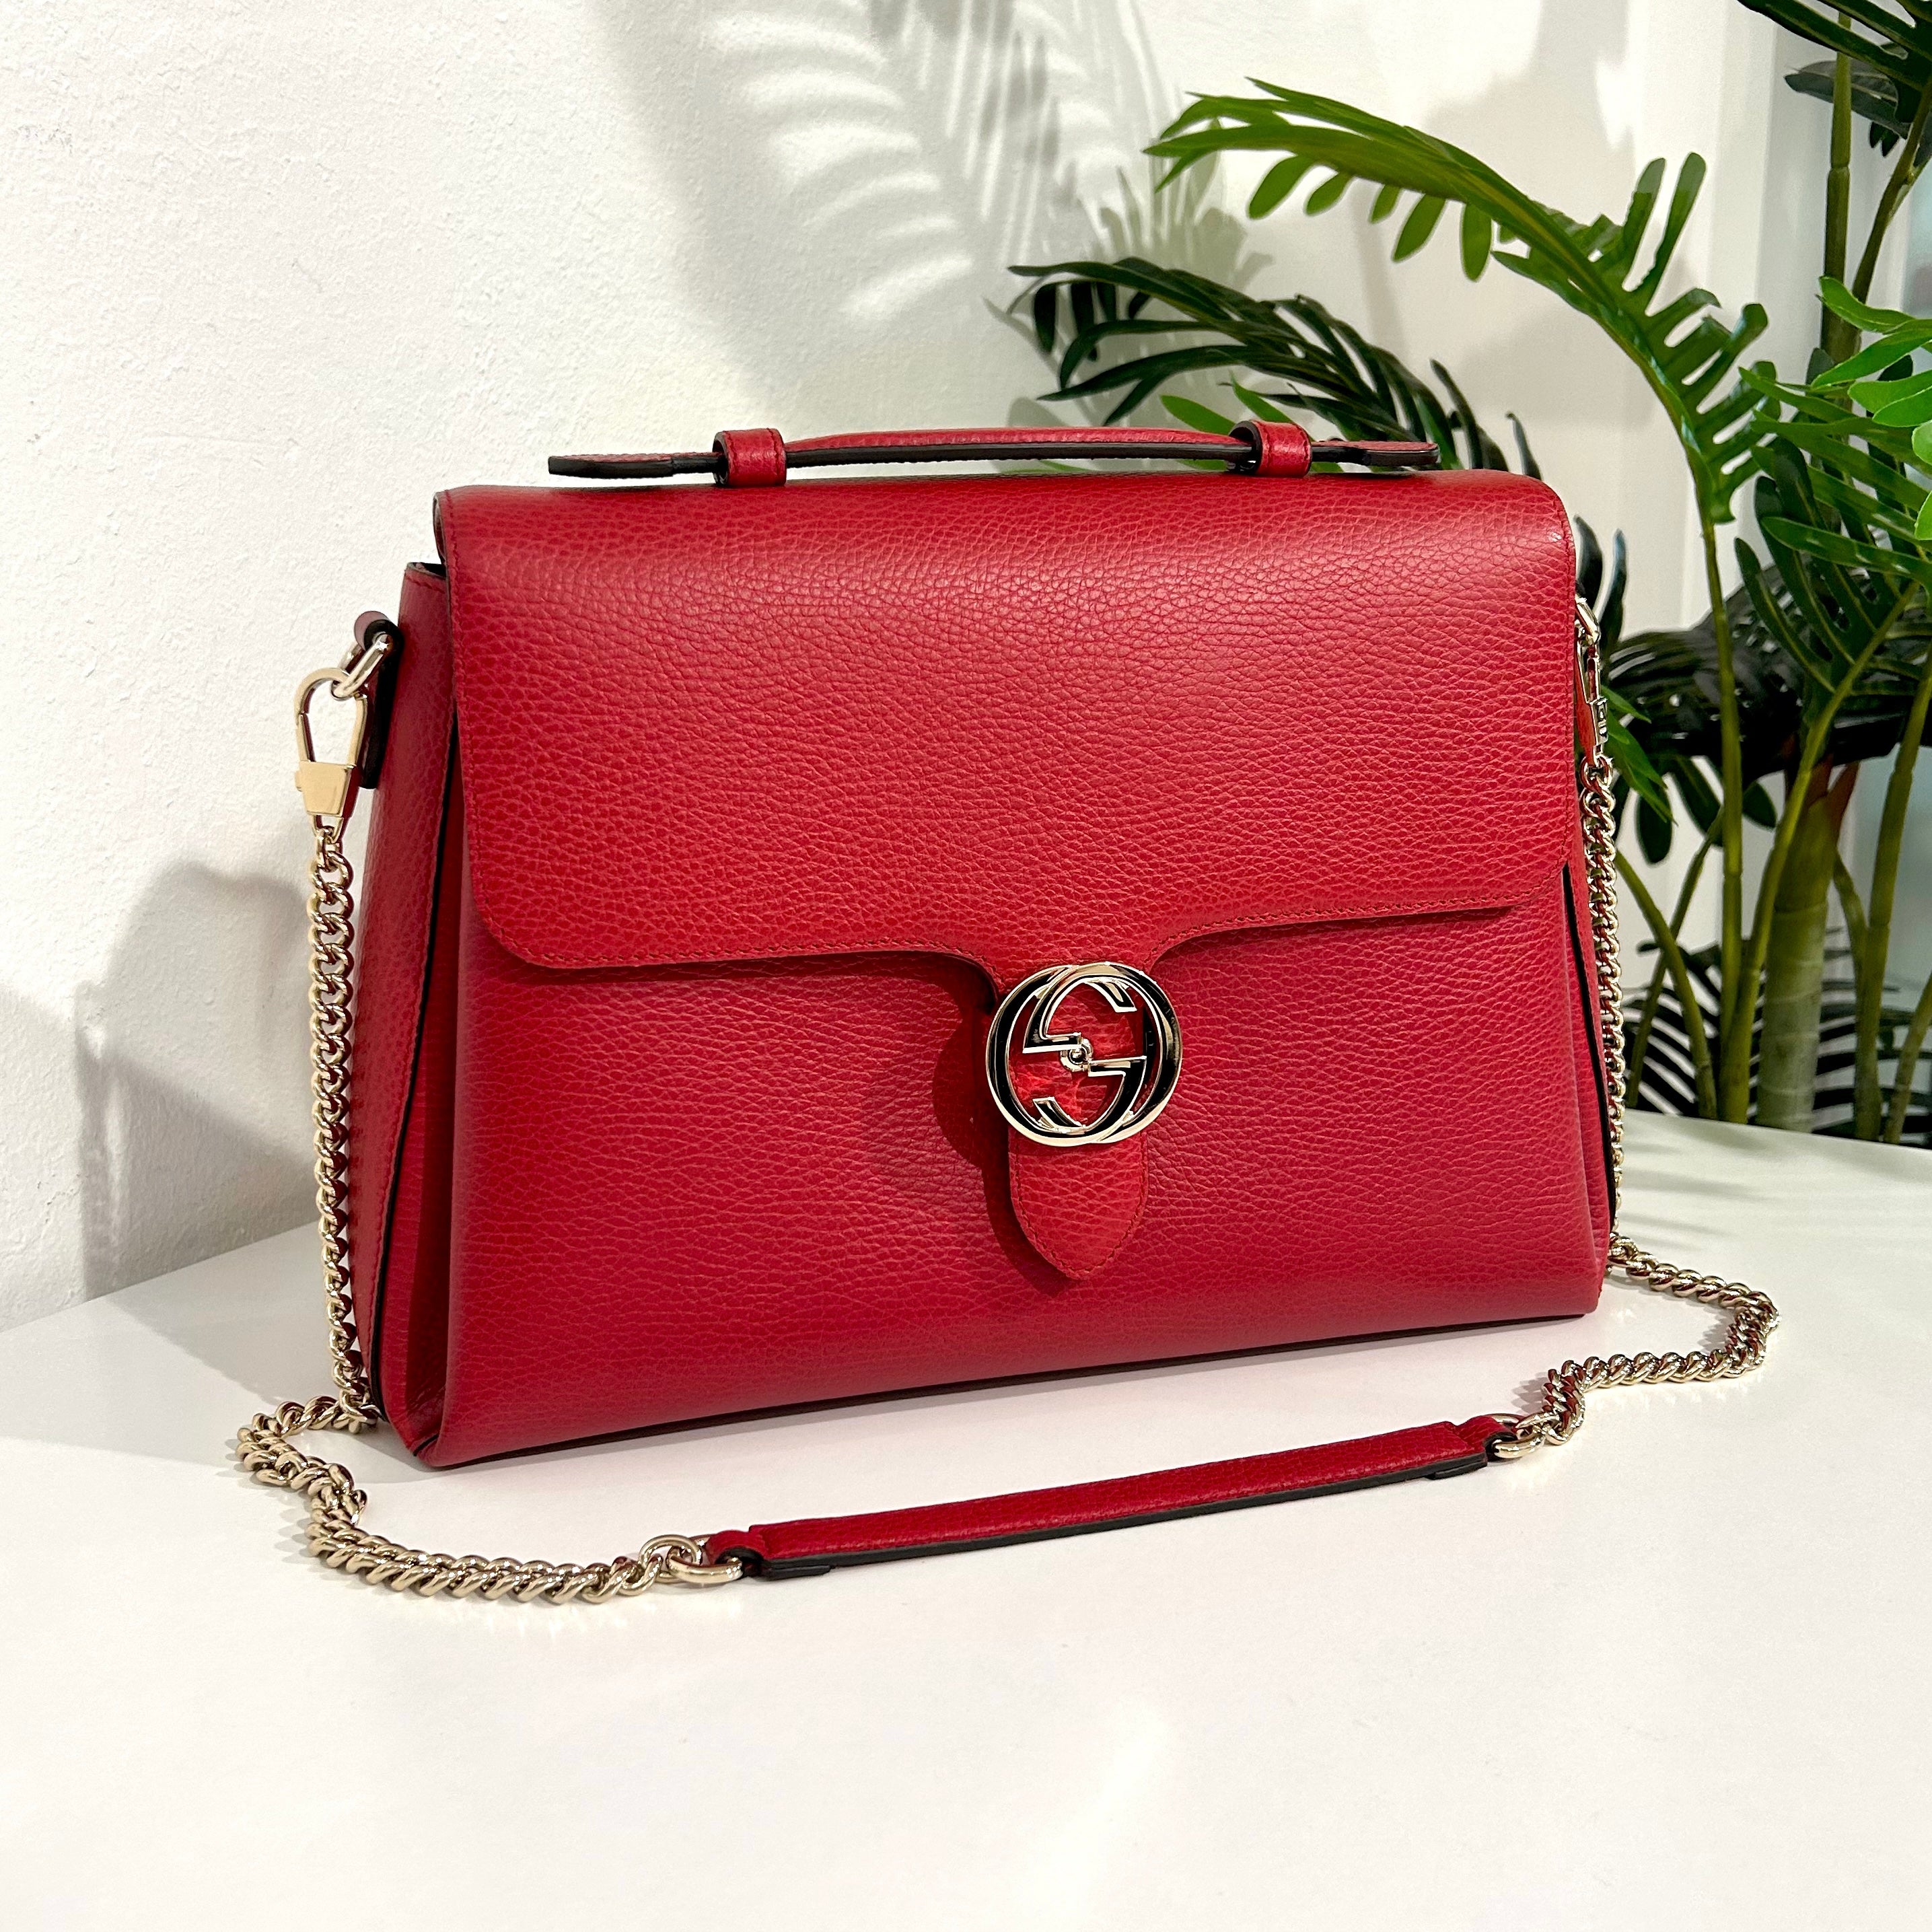 Gucci Red Leather Small Dollar Interlocking Chain Crossbody Bag